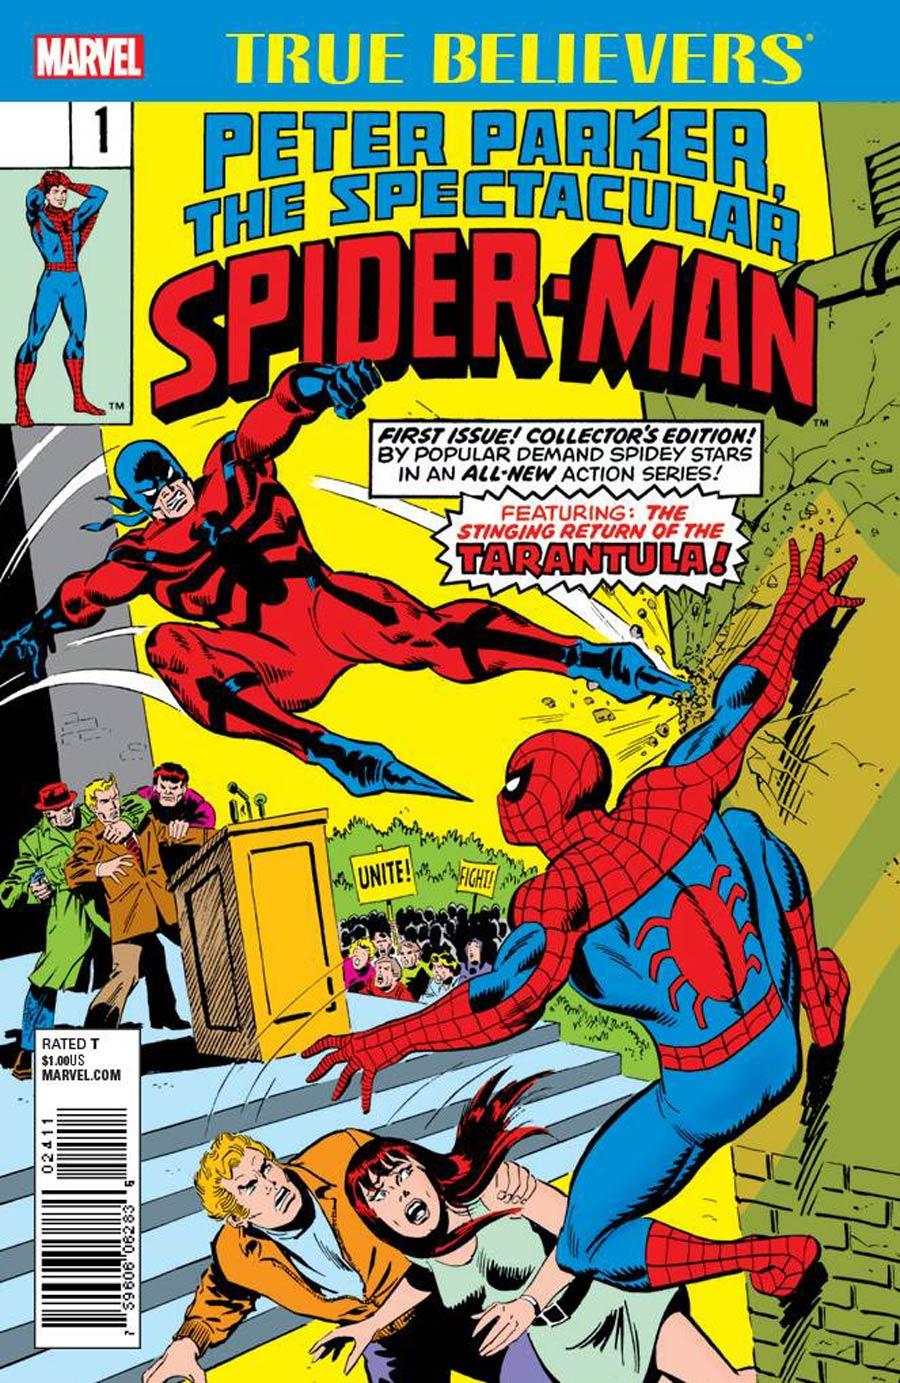 True Believers Peter Parker Spectacular Spider-Man Vol. 1 #1